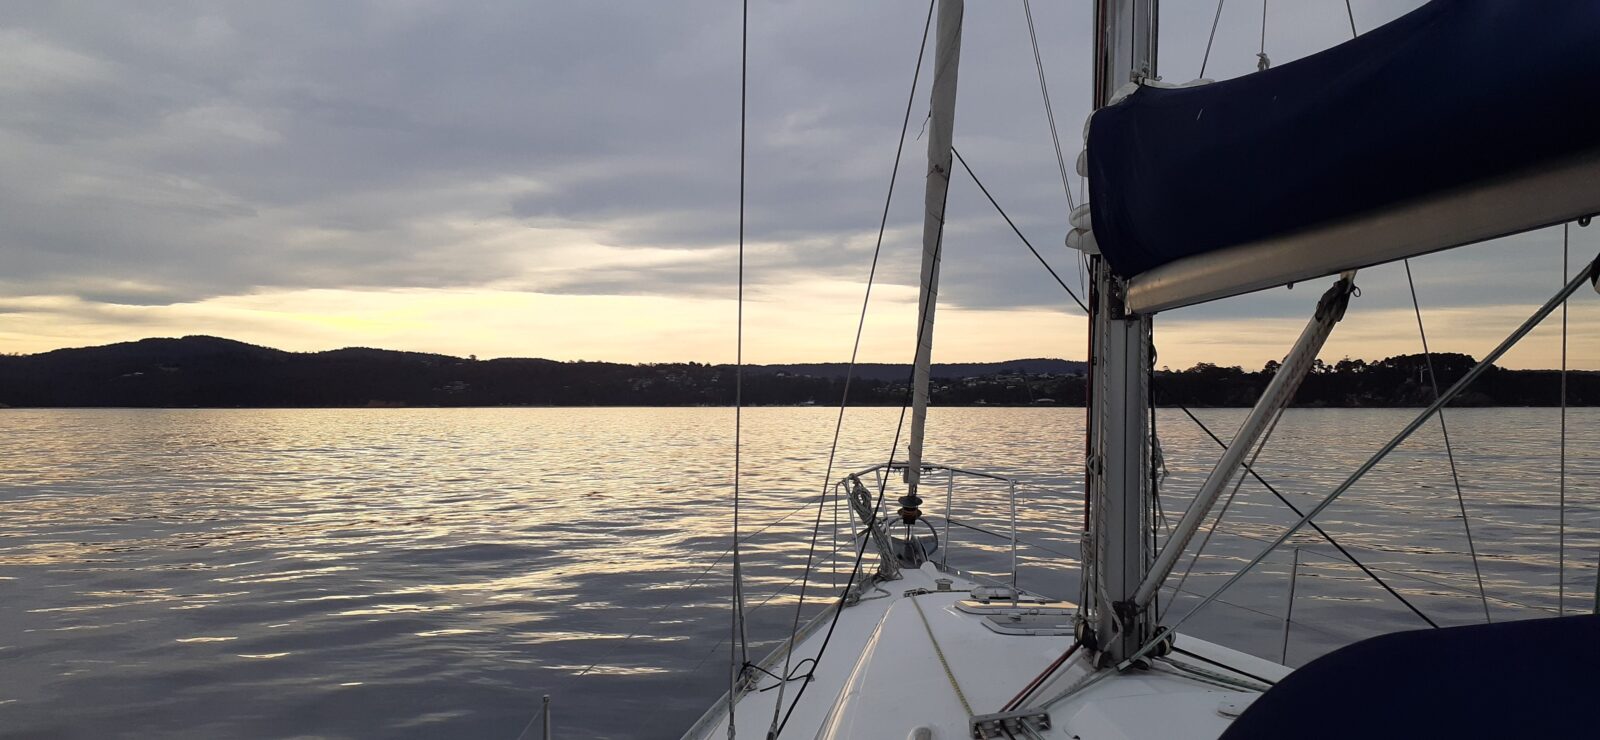 Luxury sailing boat sailing along smooth waters at sunset towards land